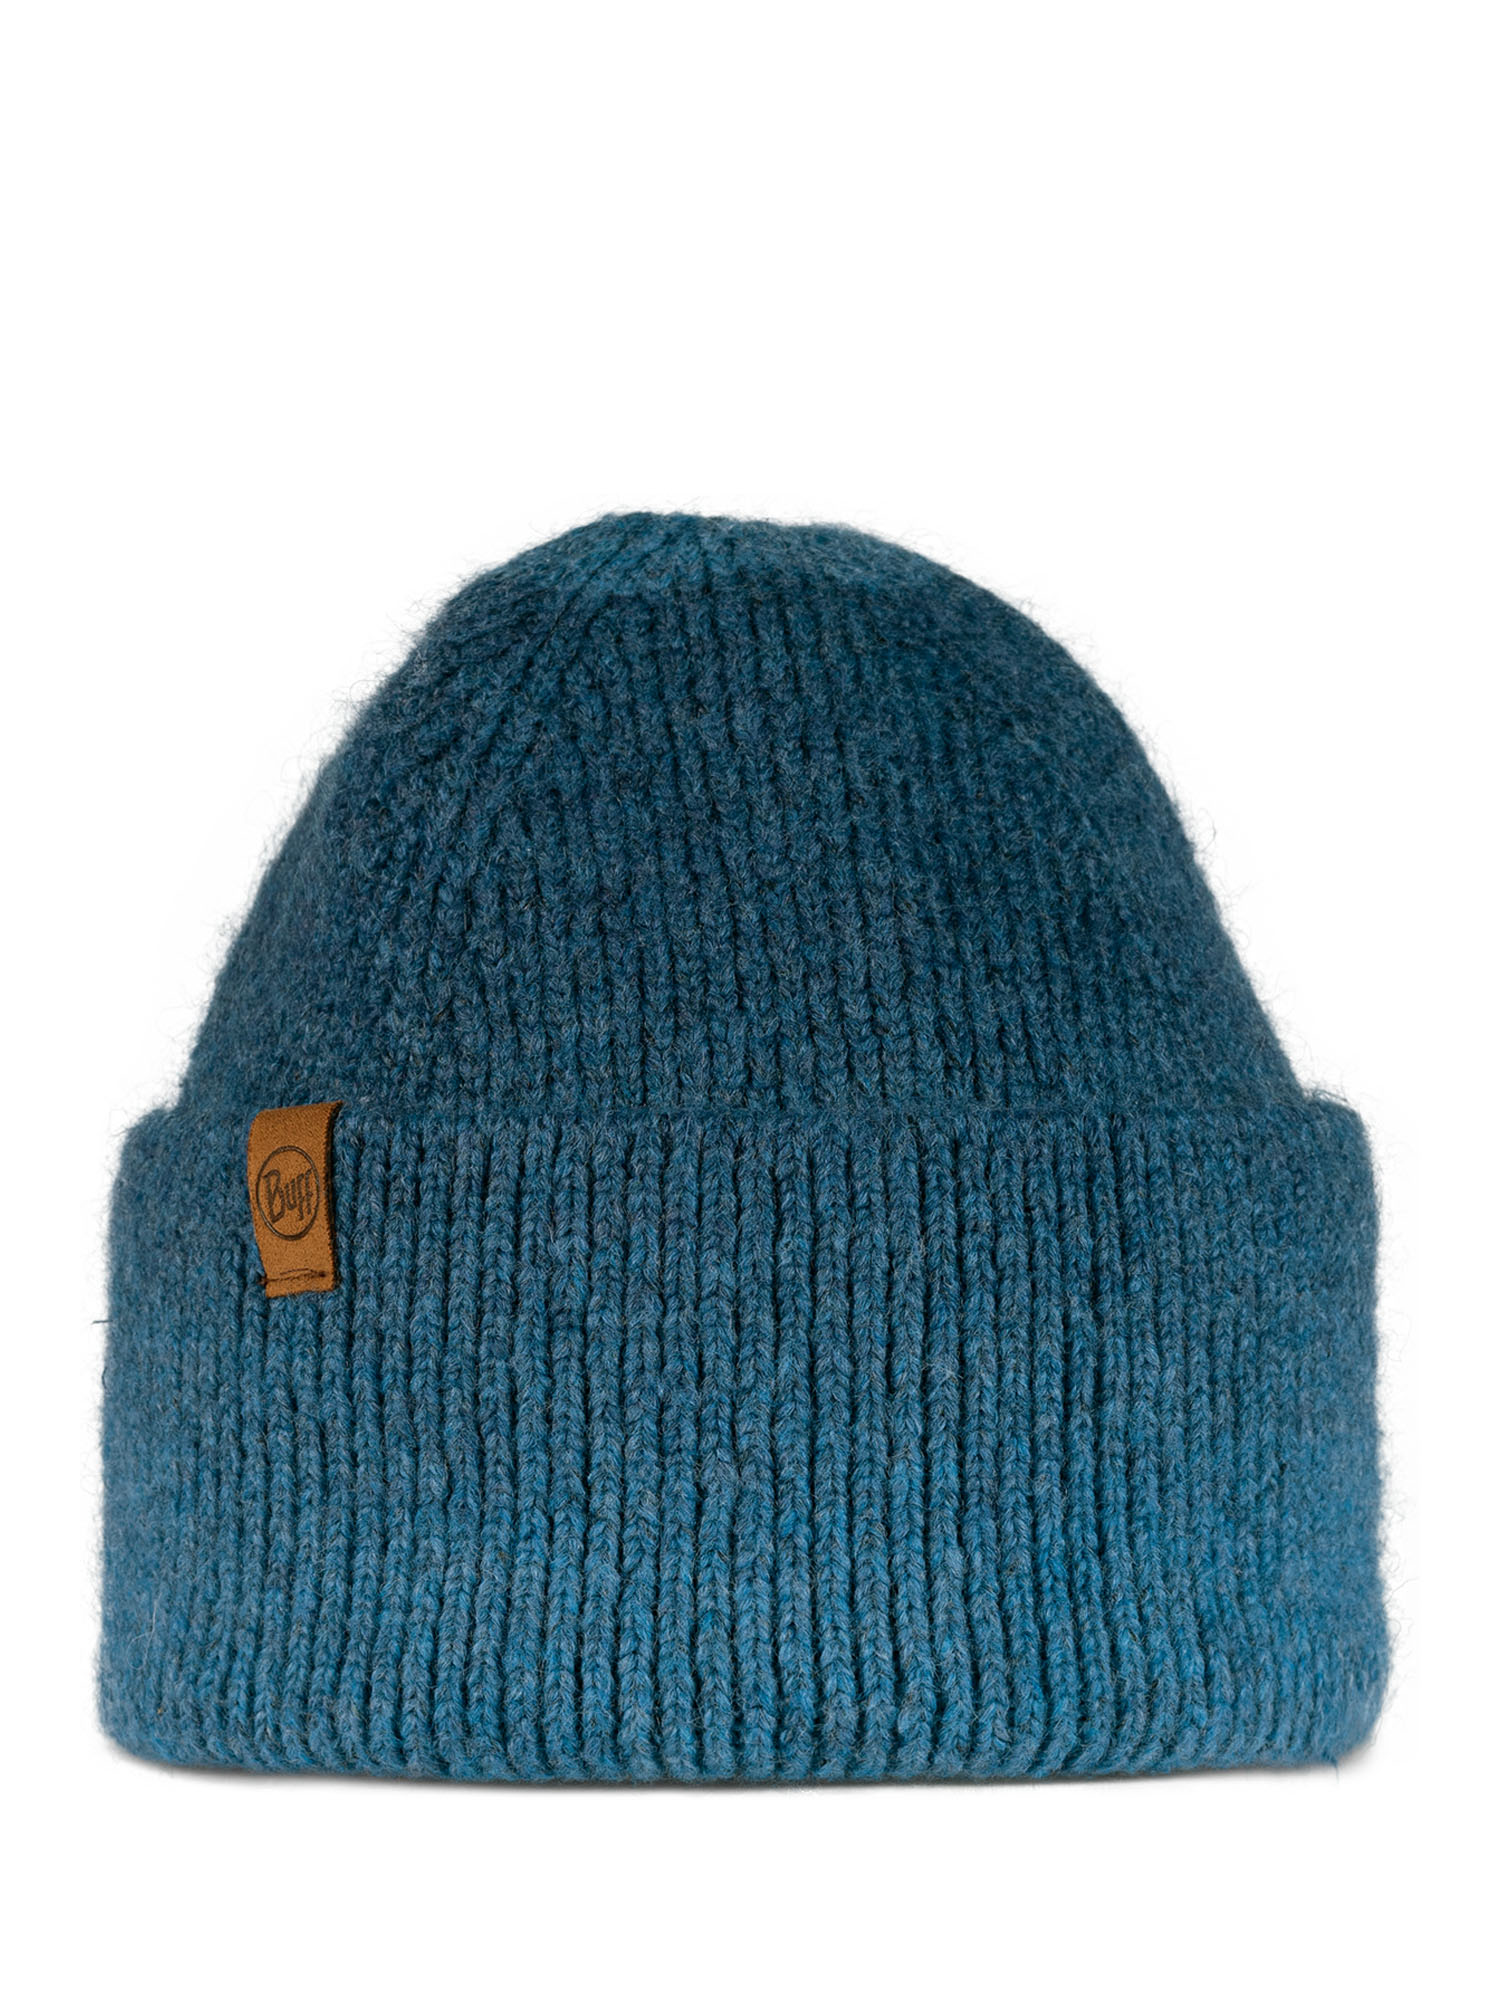 Шапка женская Buff Knitted Hat Marin синяя, one size